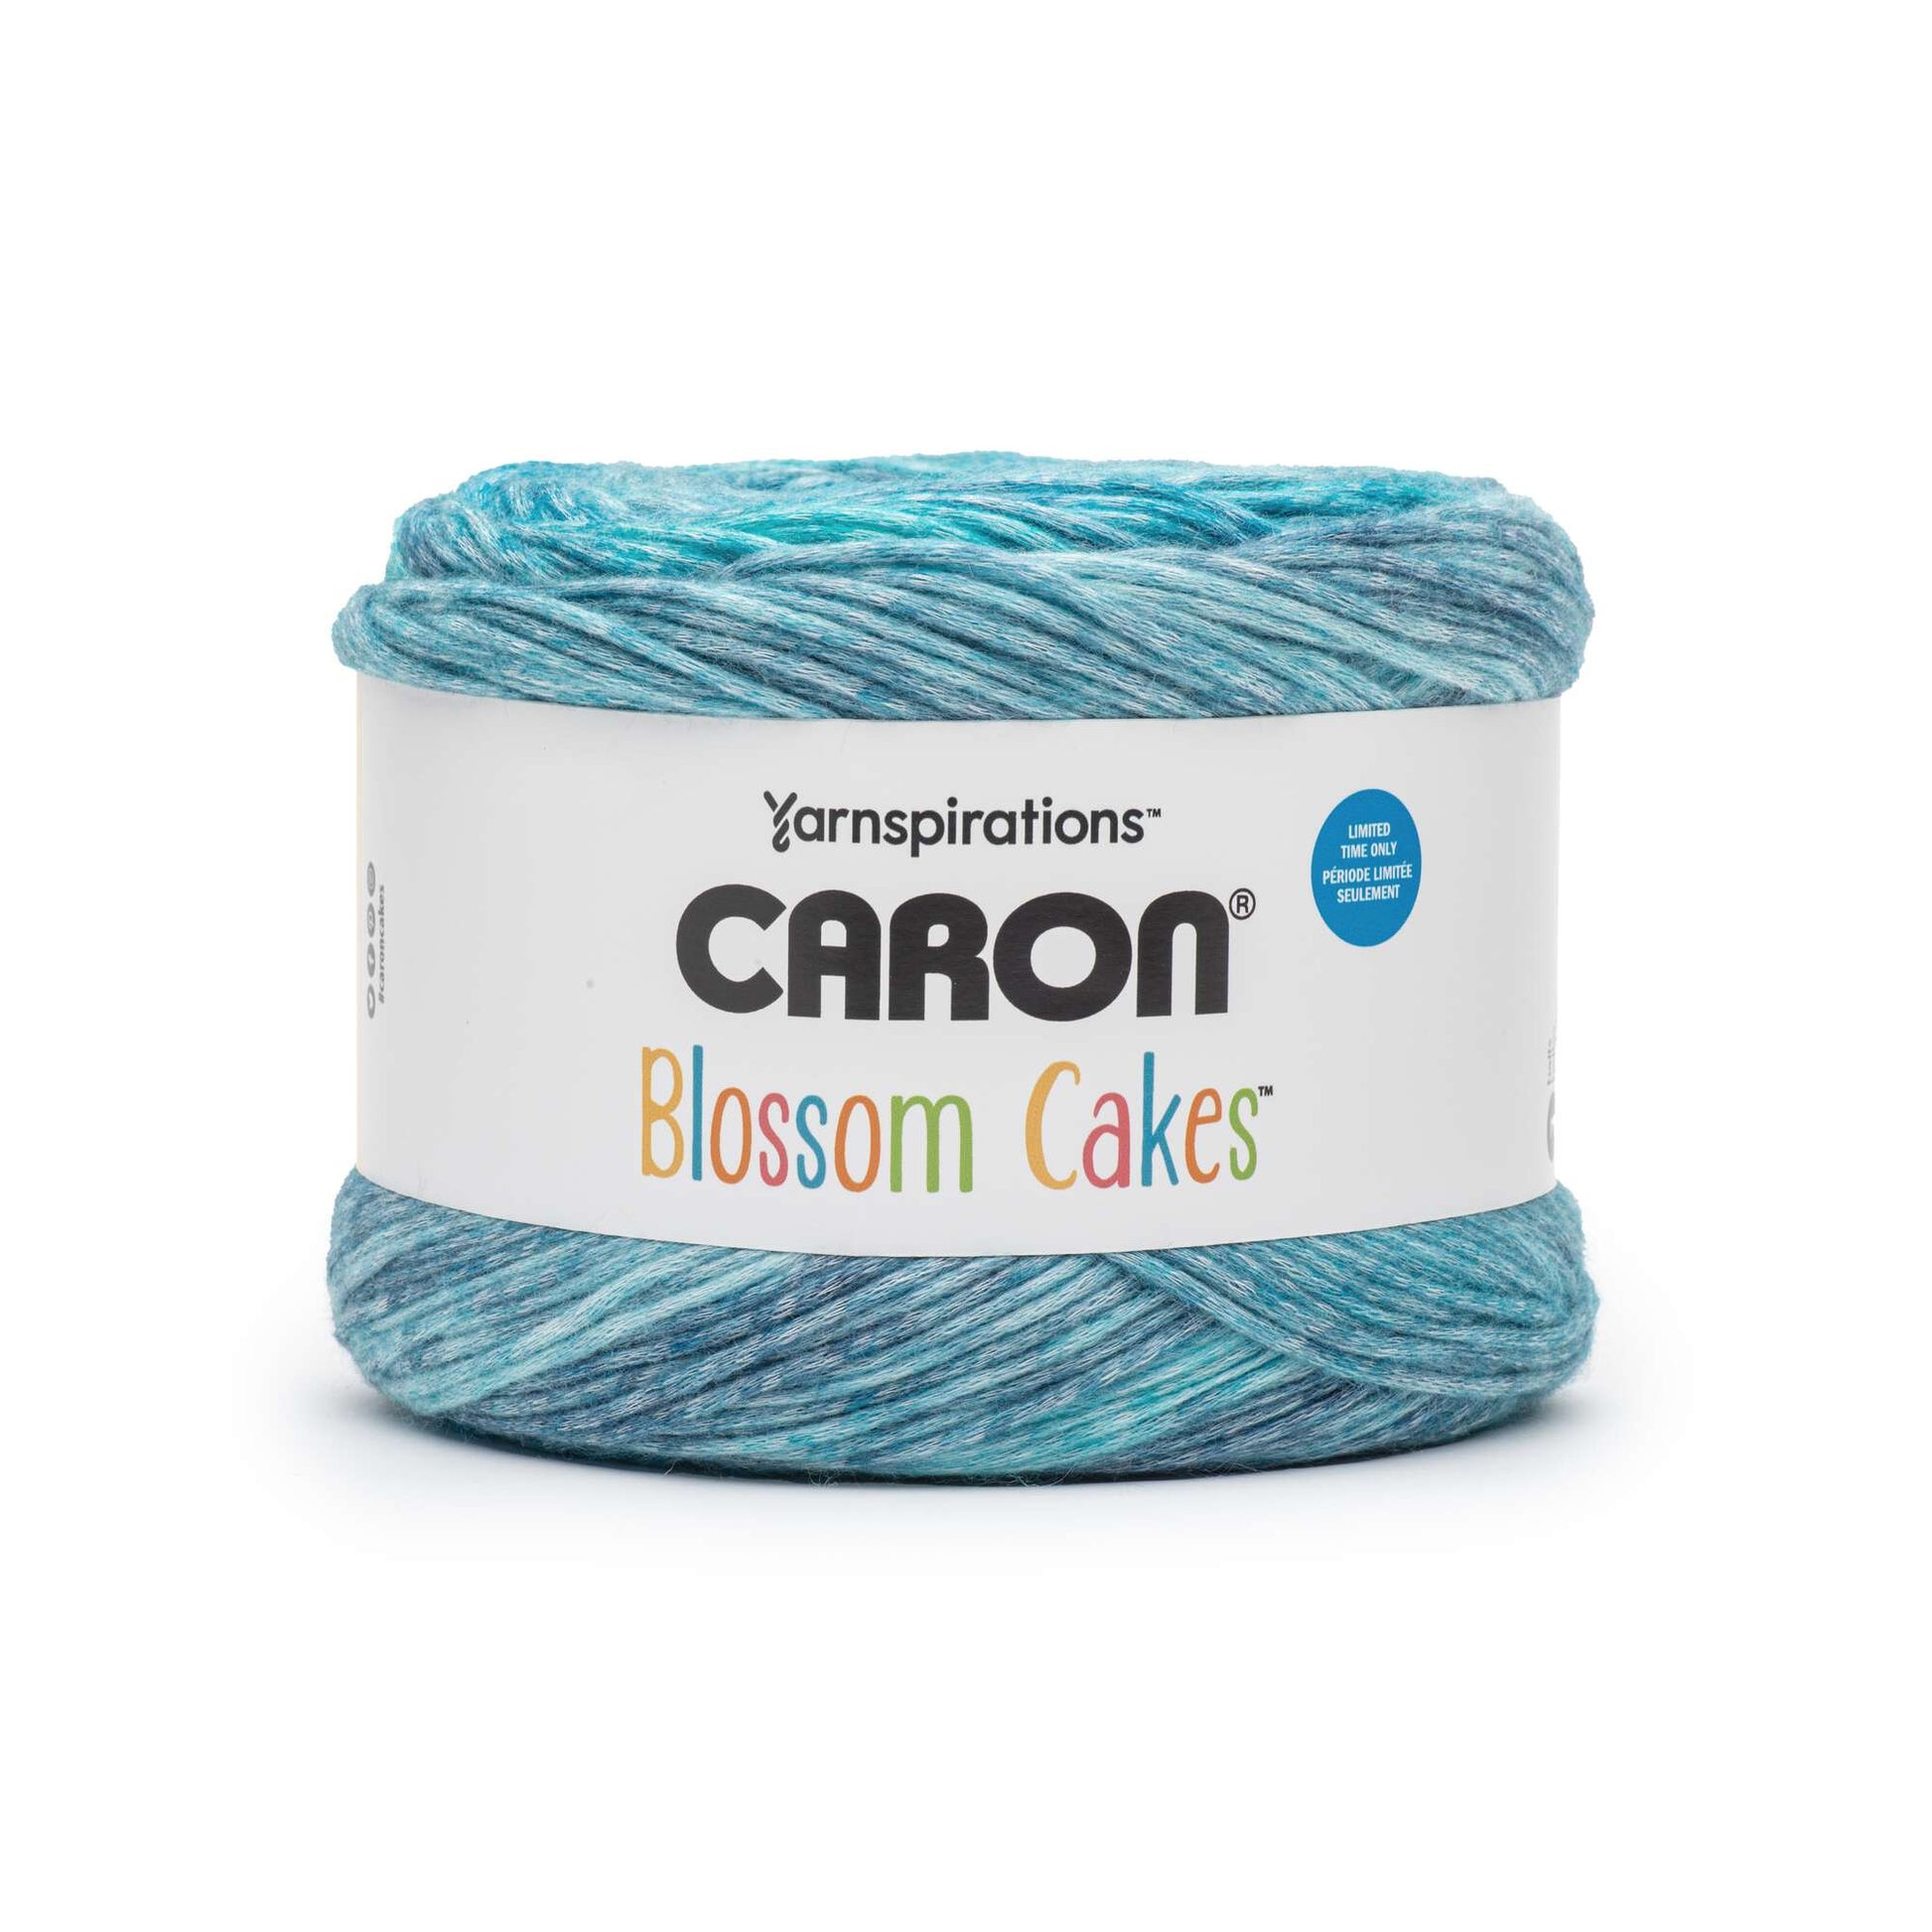 Caron Blossom Cakes Yarn, Retailer Exclusive